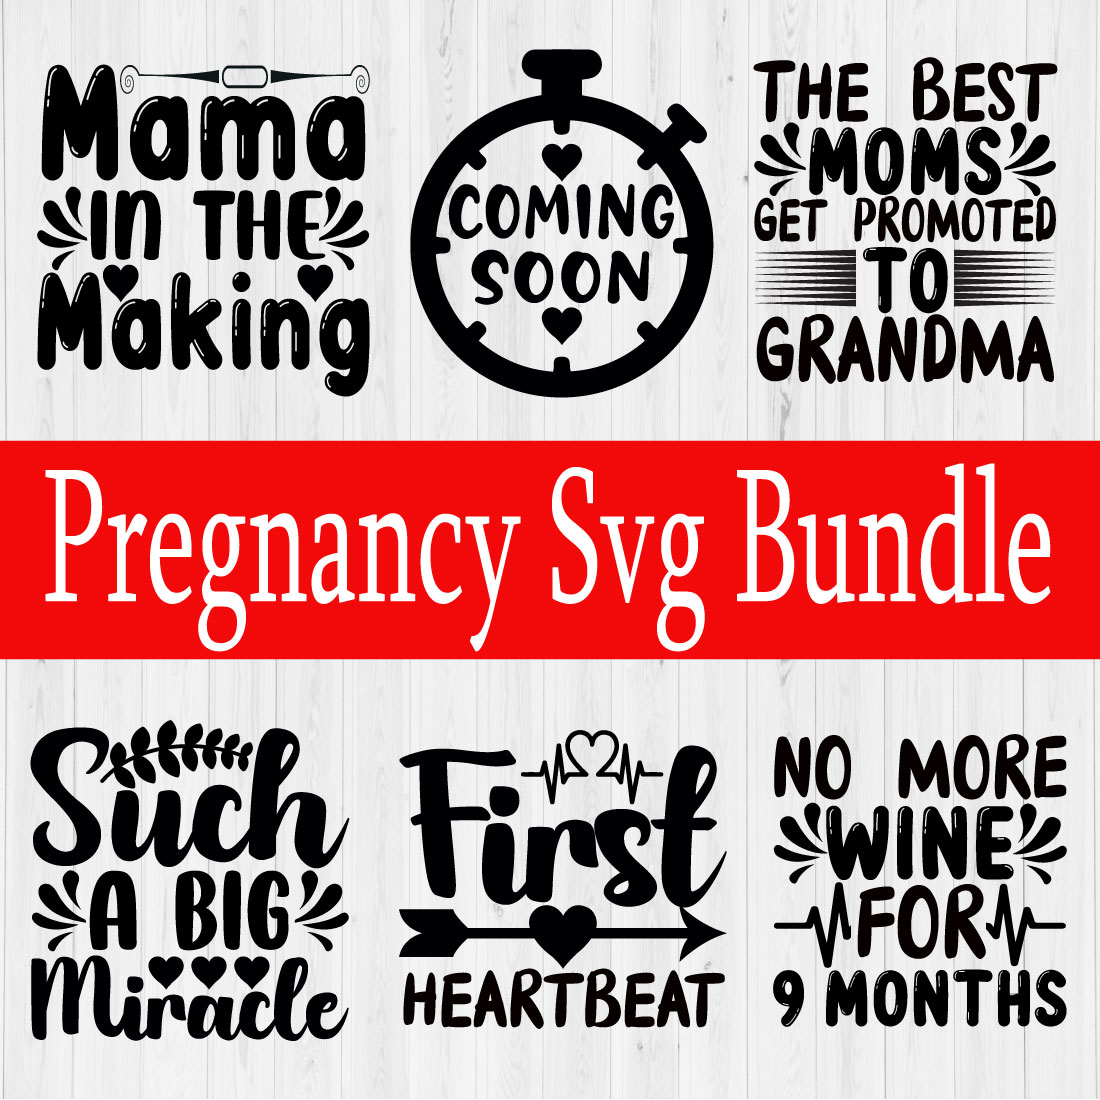 Pregnancy Svg Bundle Vol1 cover image.